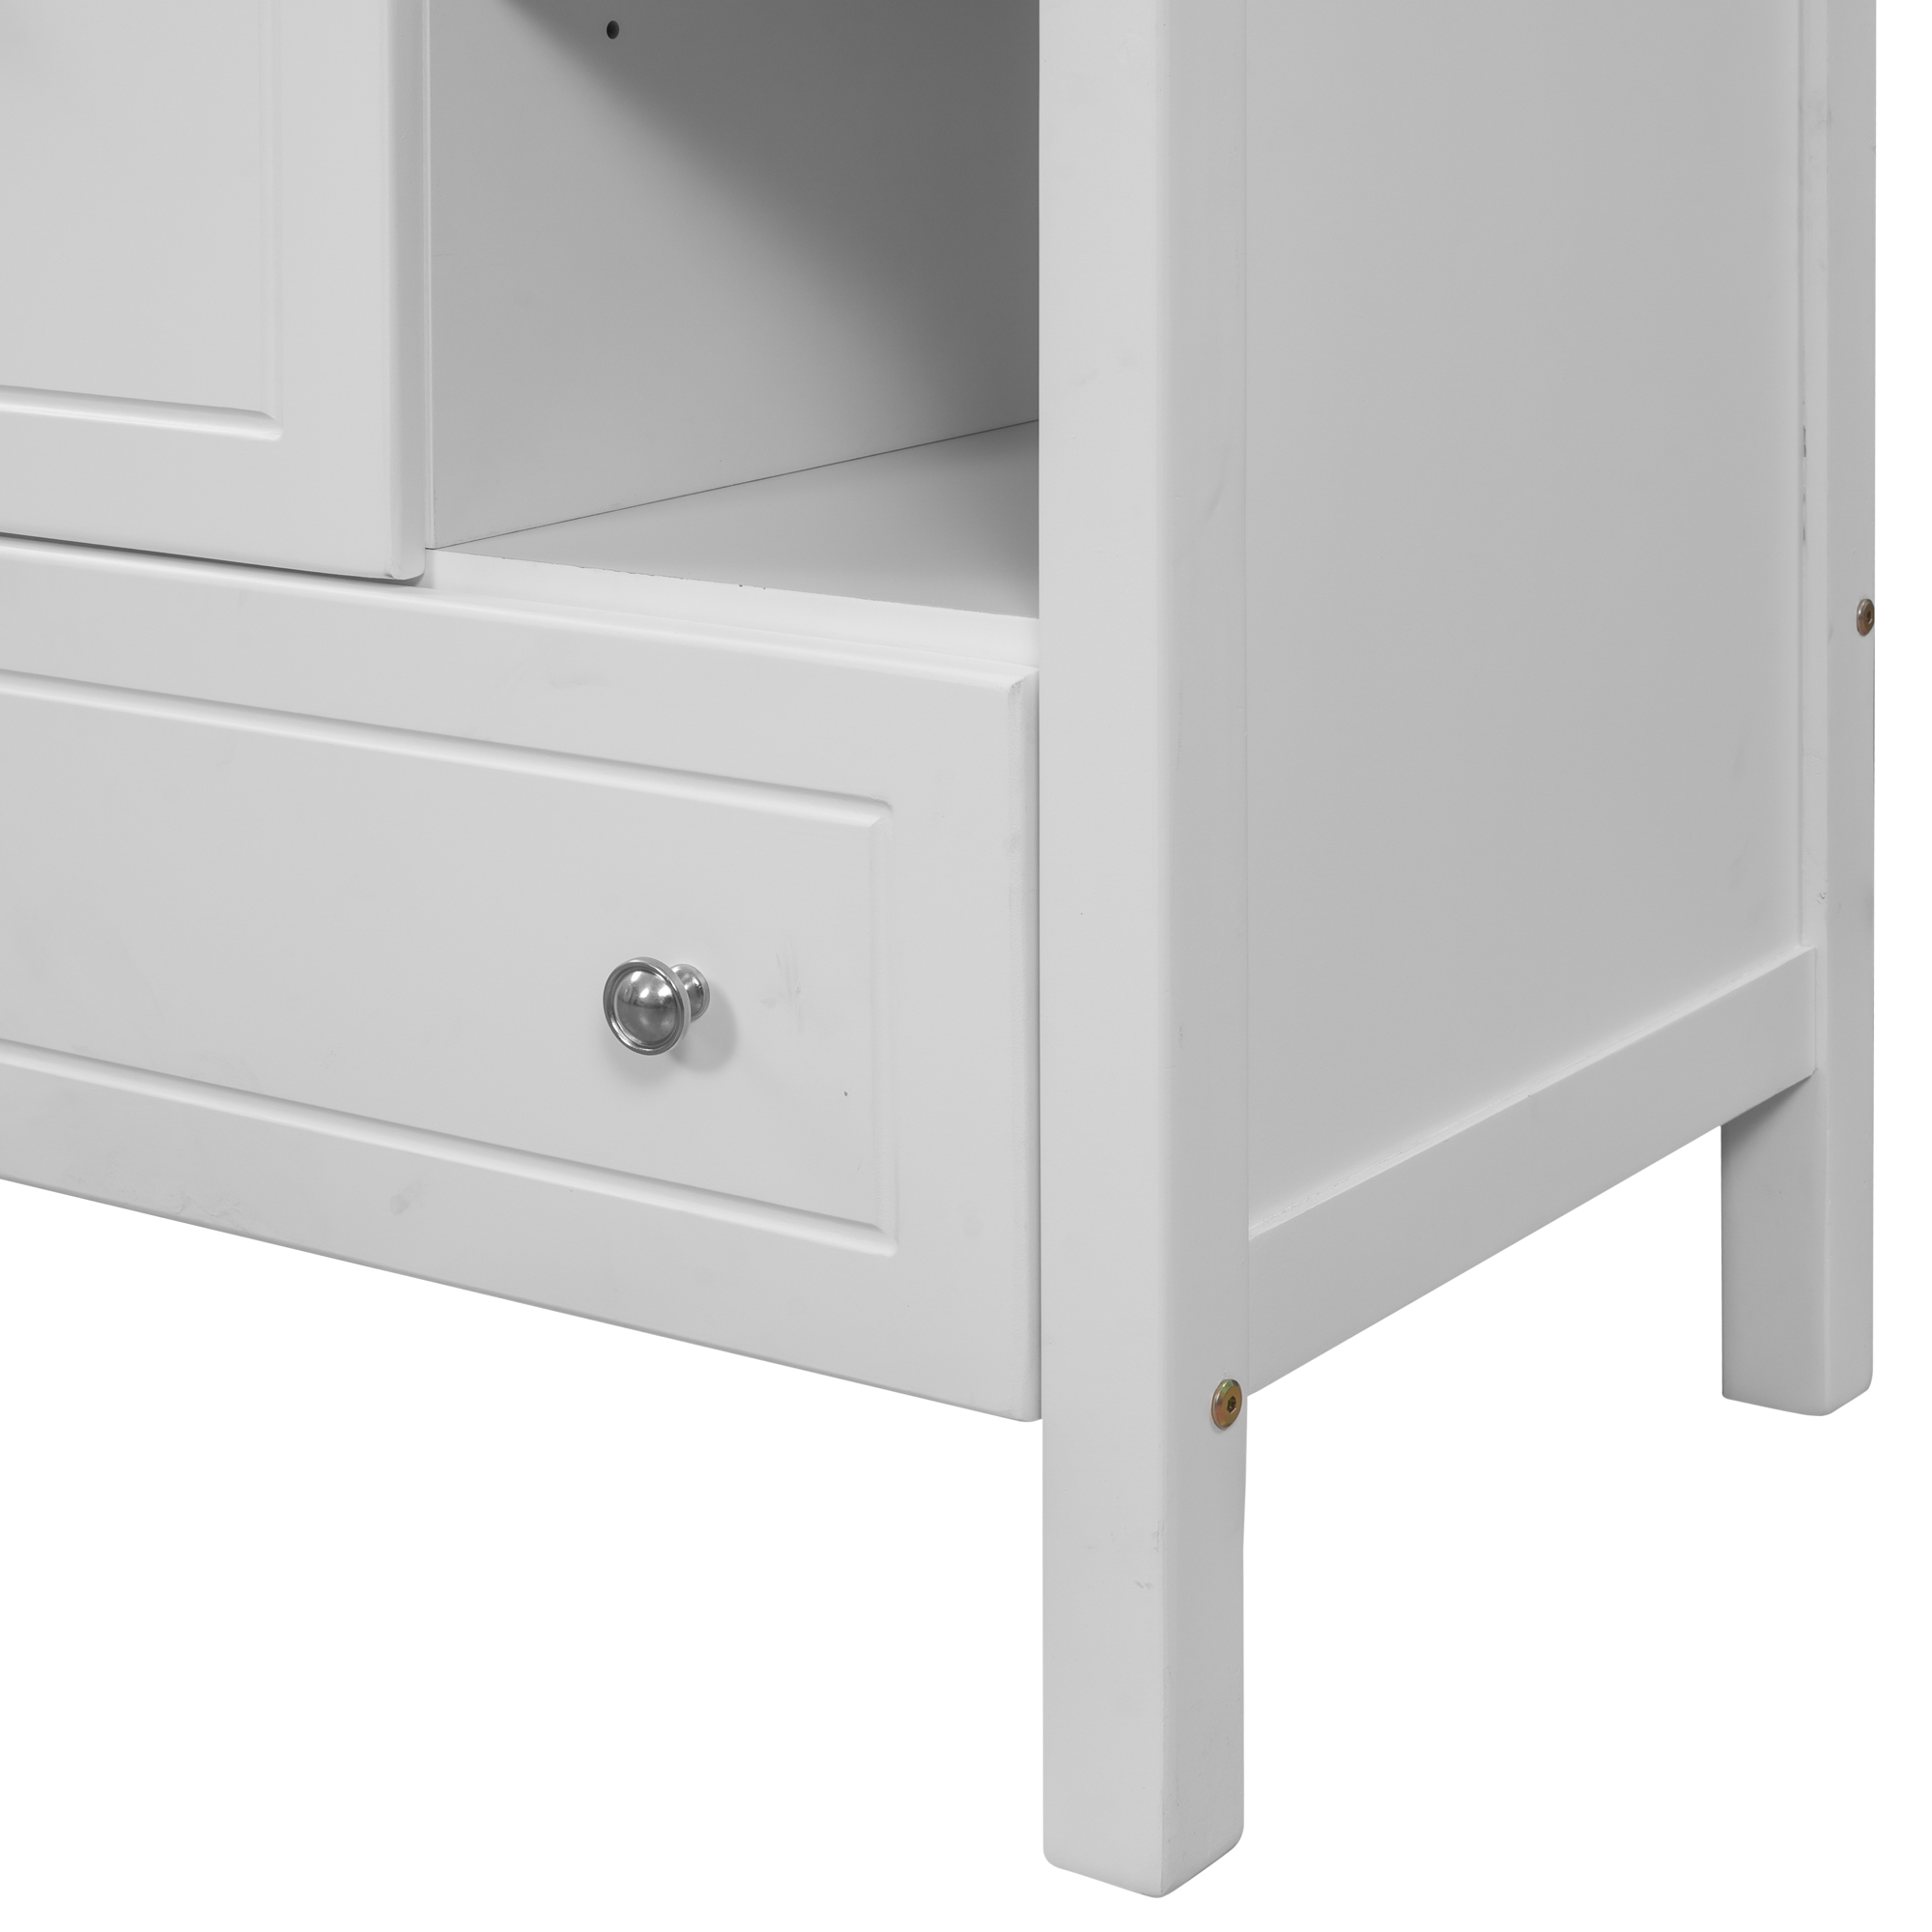 30" Bathroom Vanity Base Only, Solid Wood Frame, Bathroom Storage Cabinet With Doors And Drawers, White - WF283480AAK